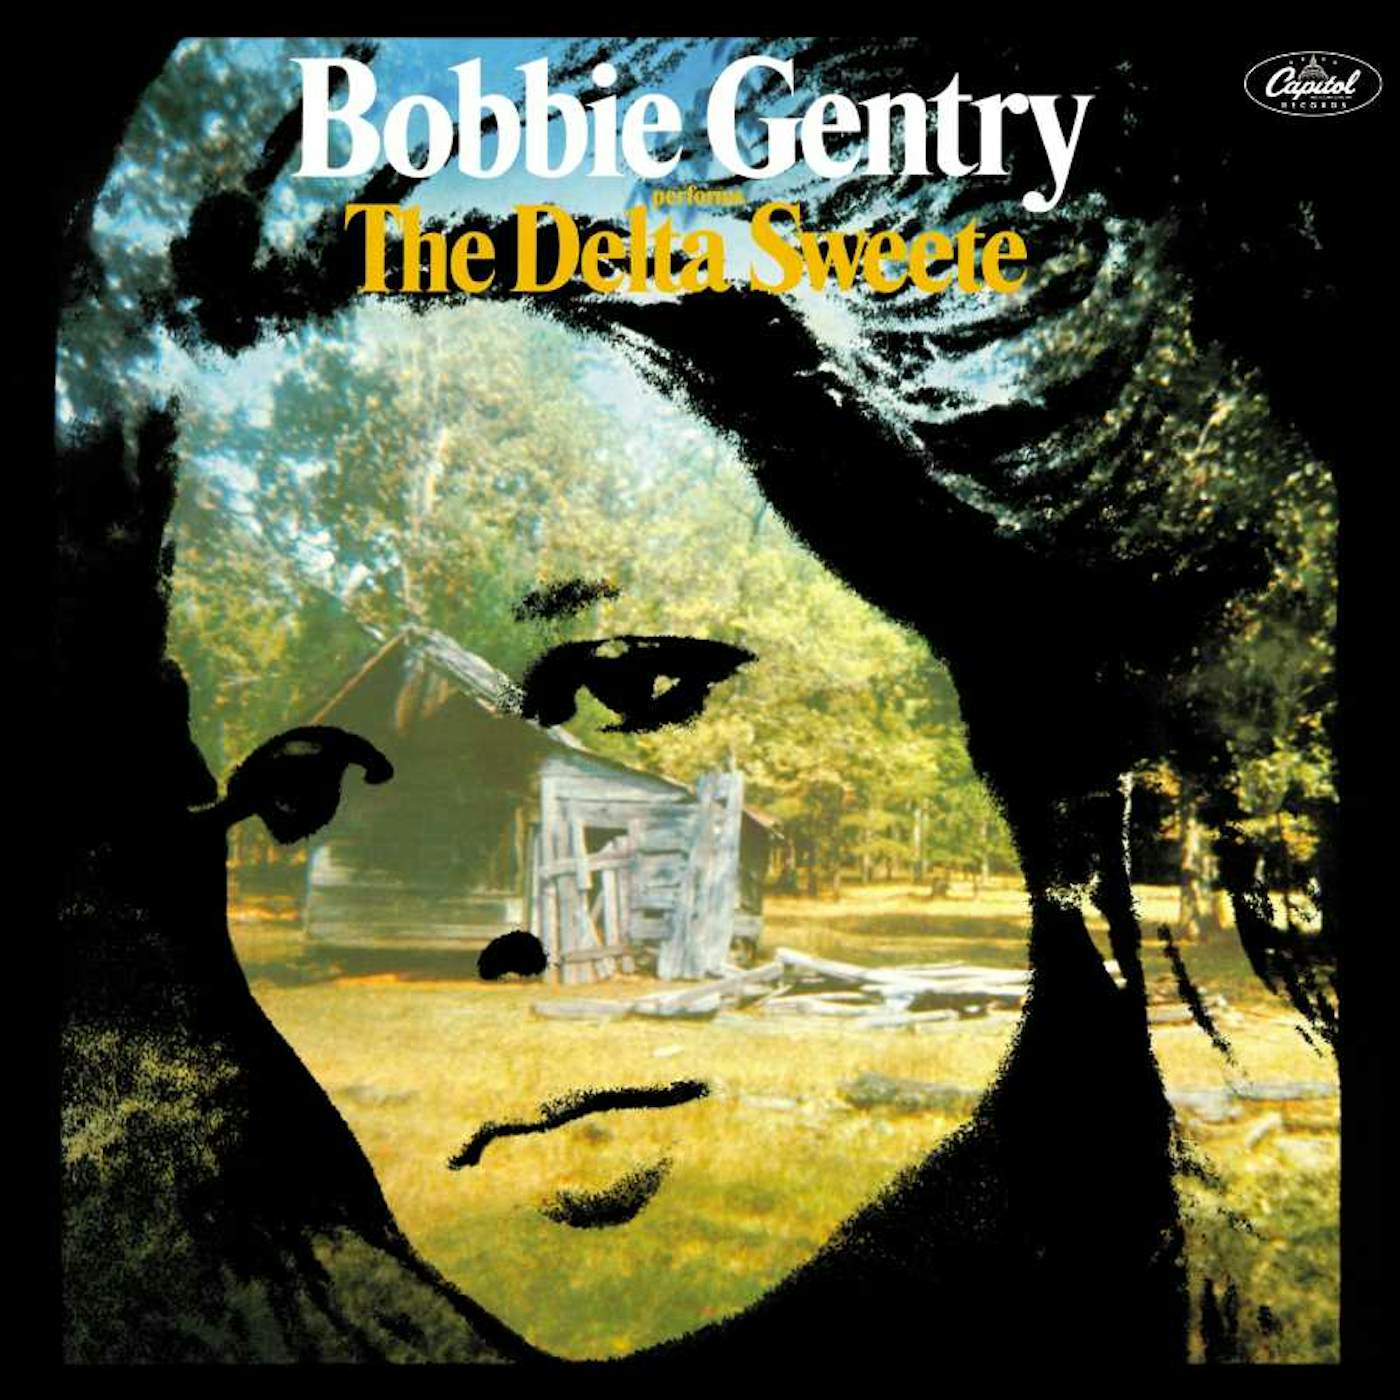 Bobbie Gentry DELTA SWEETE CD